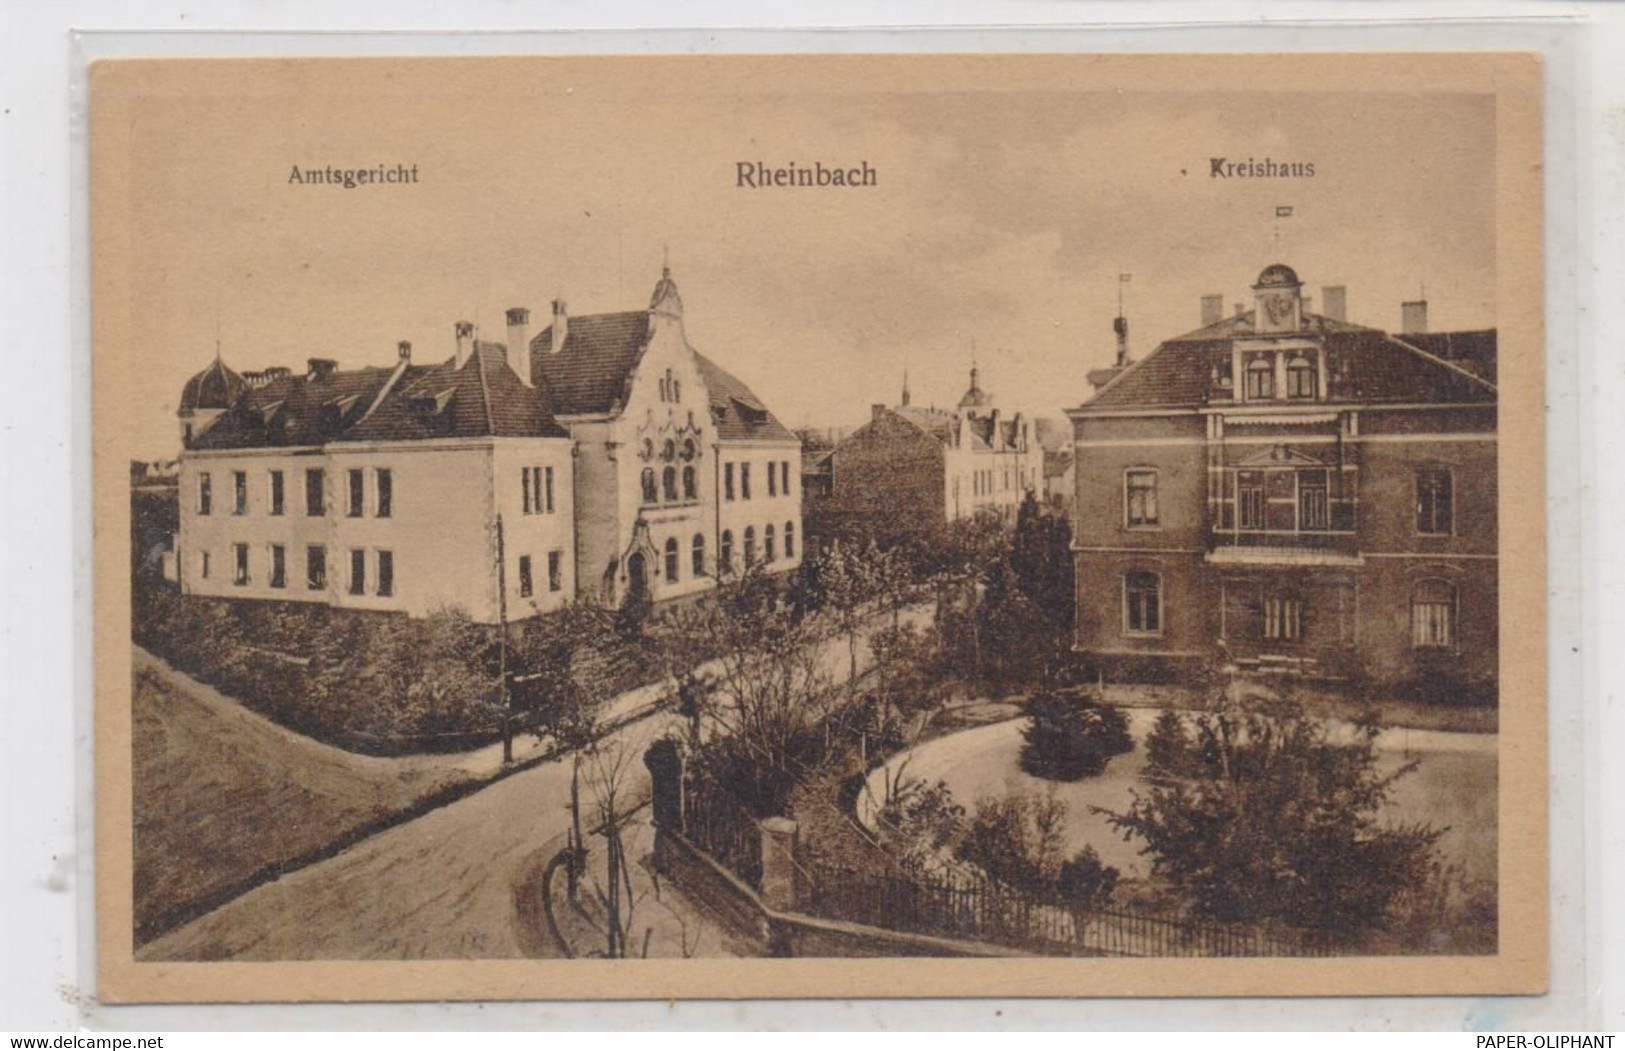 5308 RHEINBACH, Amtsgericht, Kreishaus (heute Rathaus), 1920, Verlag Riesenkönig - Siegburg